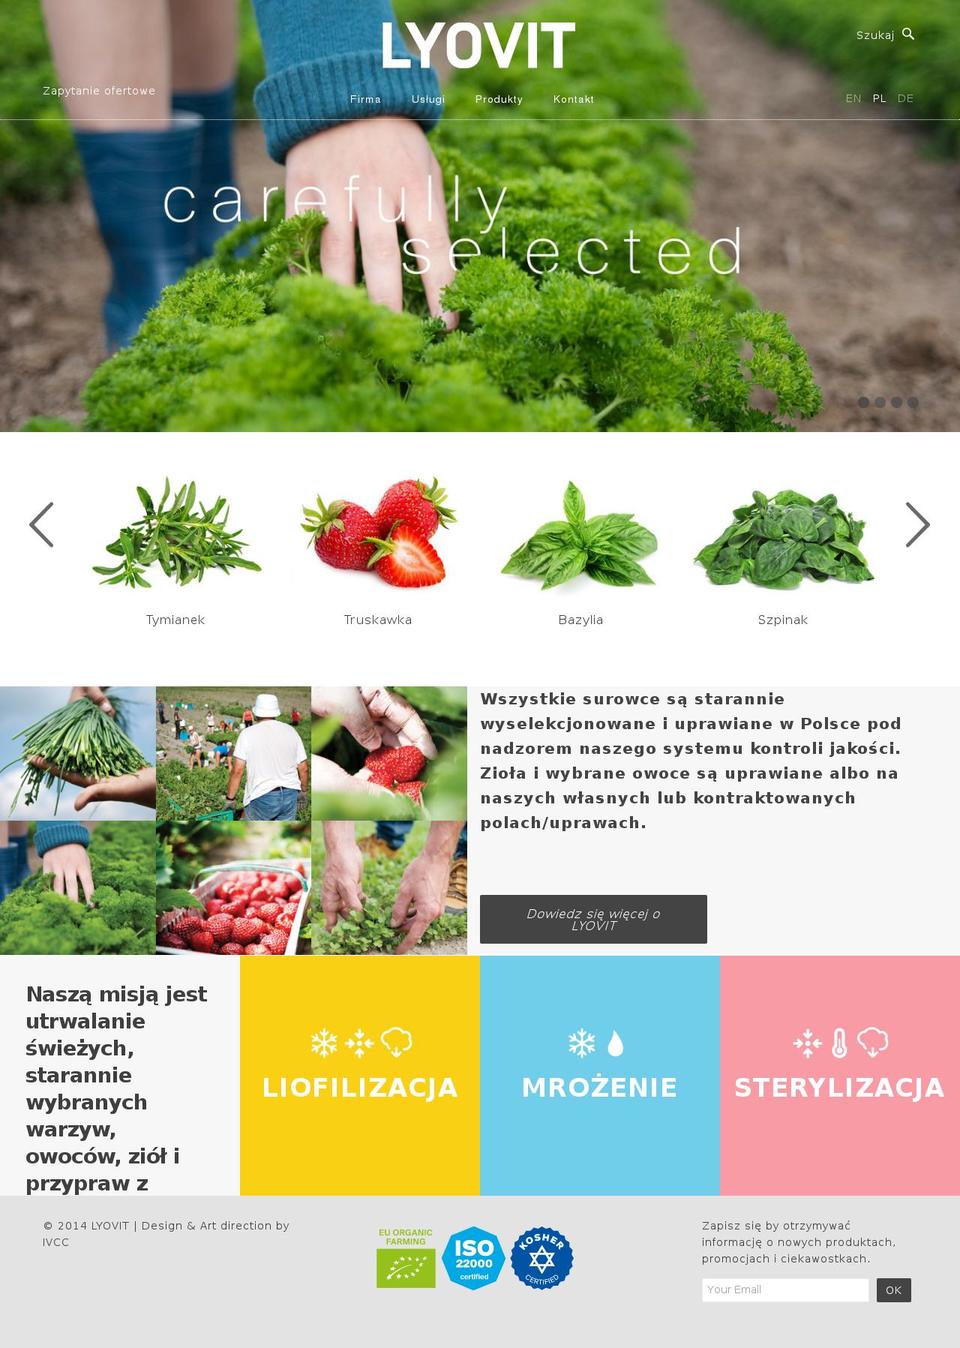 lyovit.pl shopify website screenshot